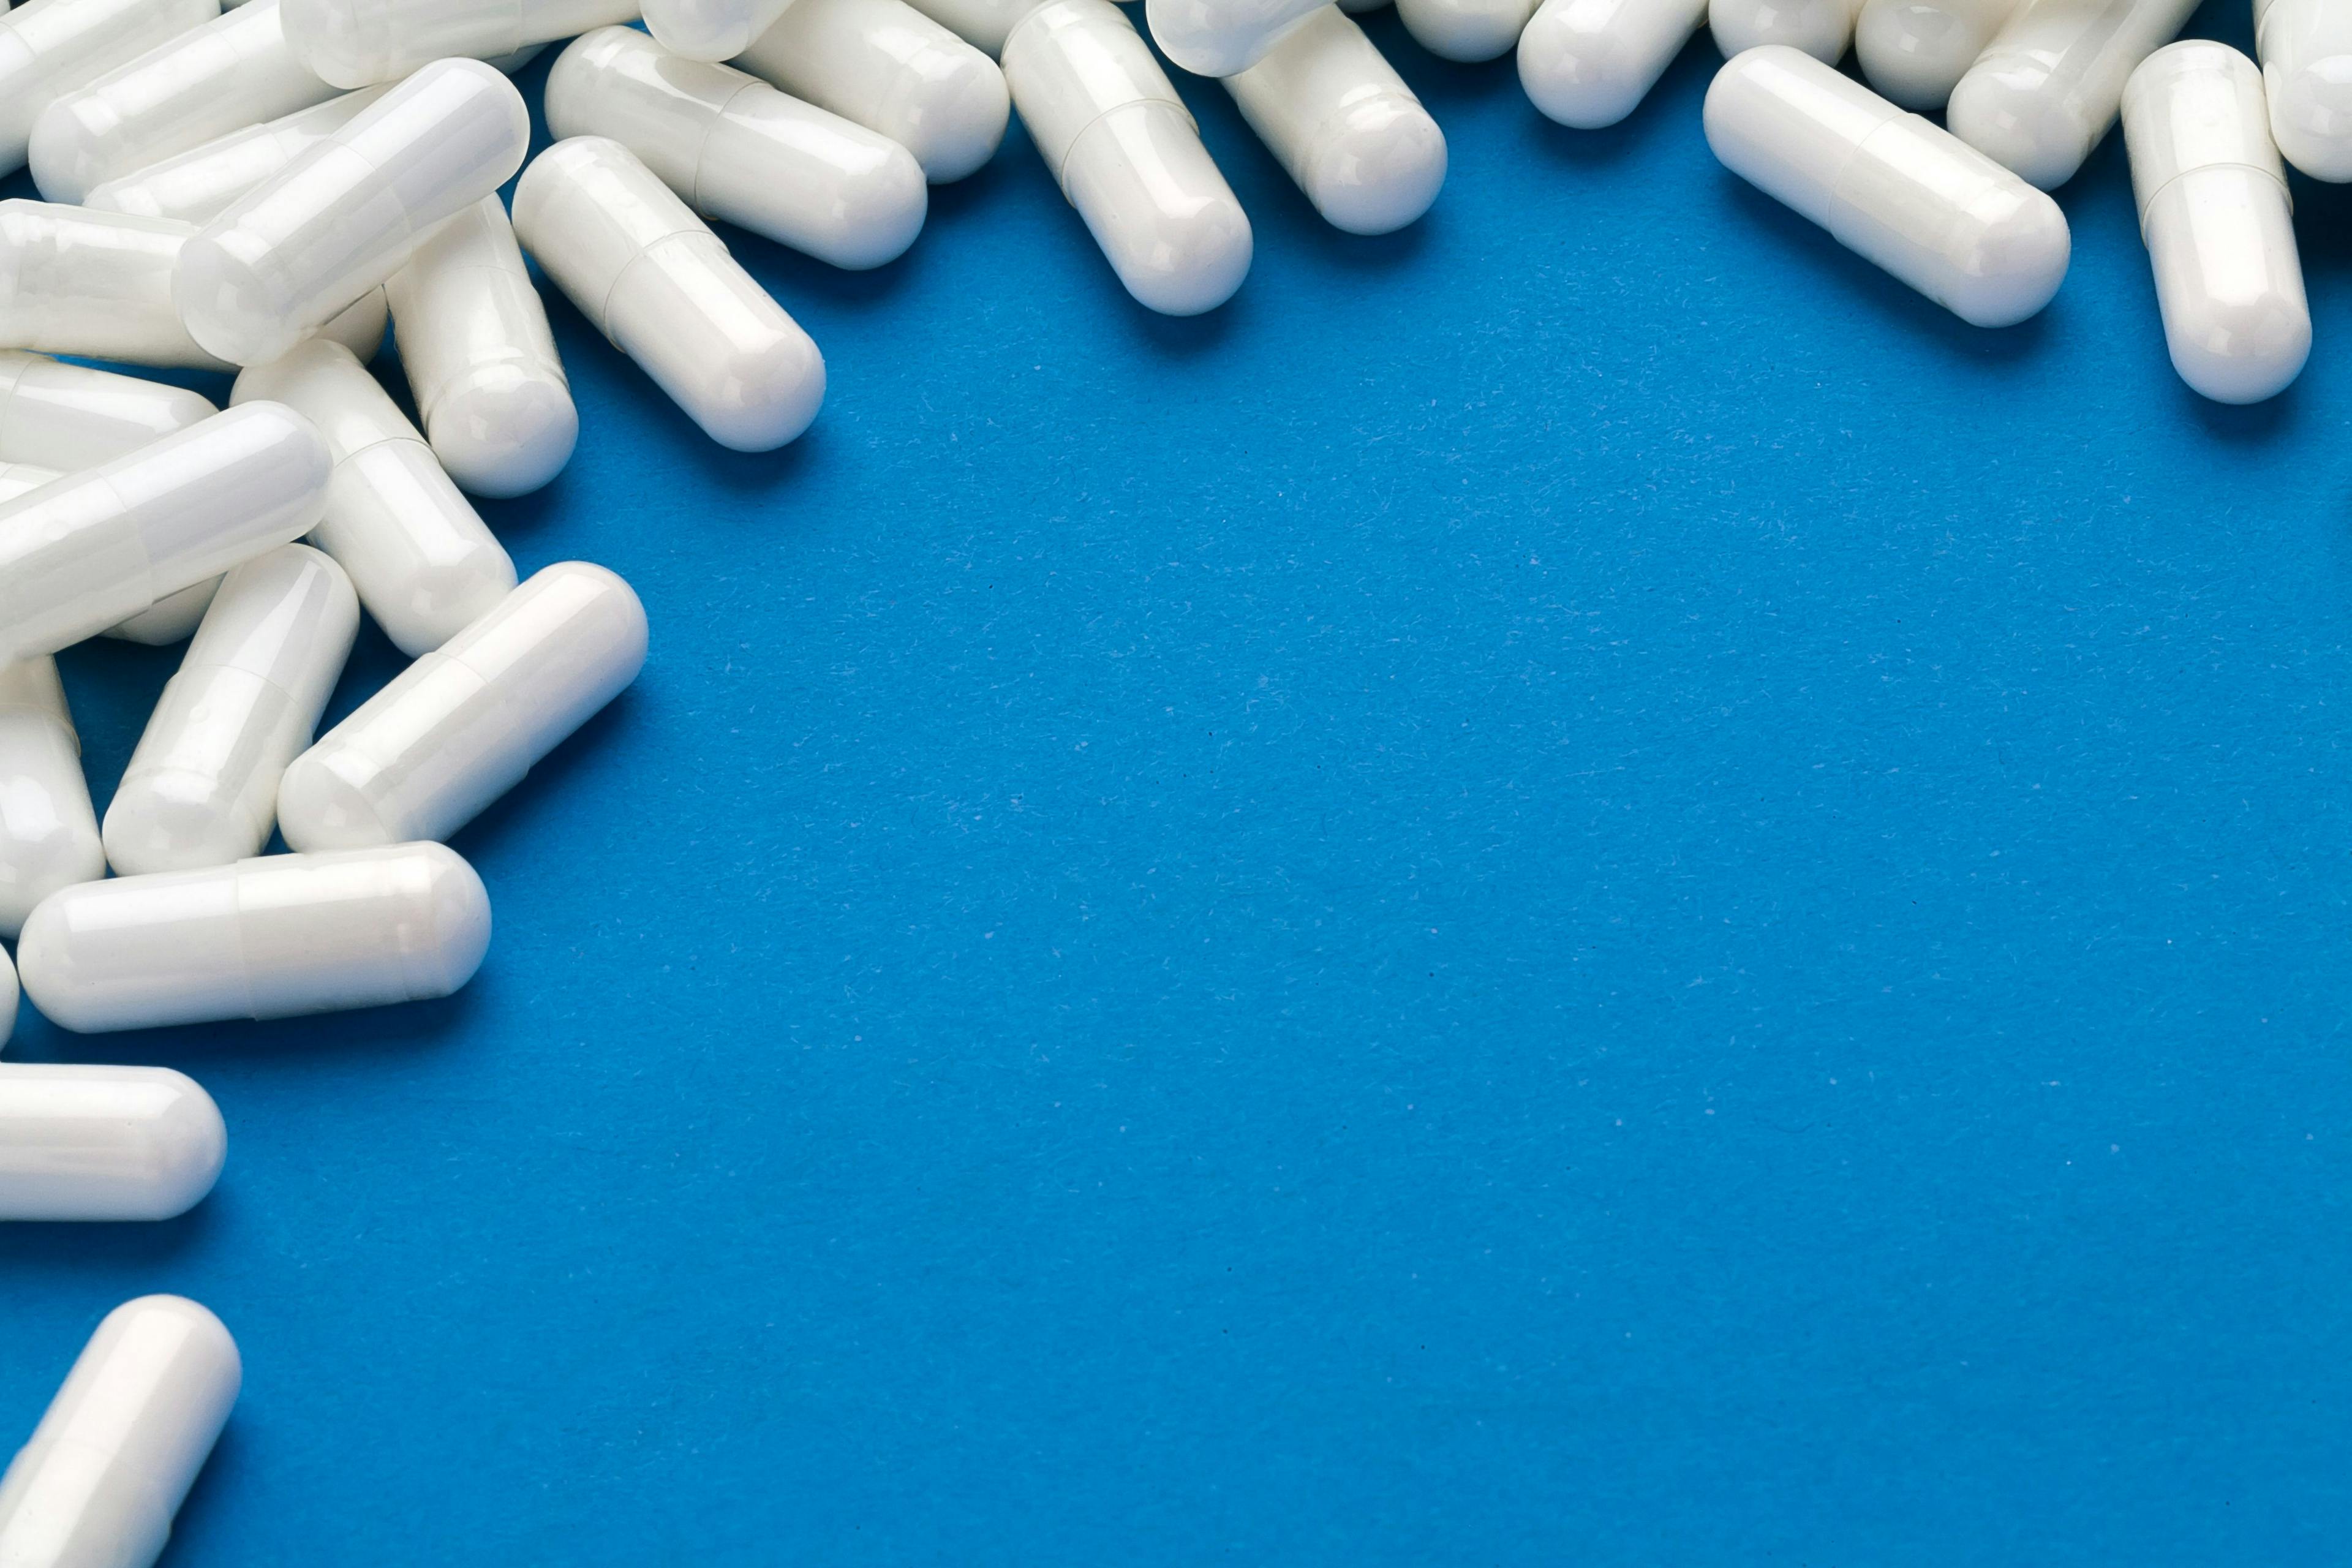 White capsules medications on blue background. | Image Credit: © Romario Ien - stock.adobe.com. 